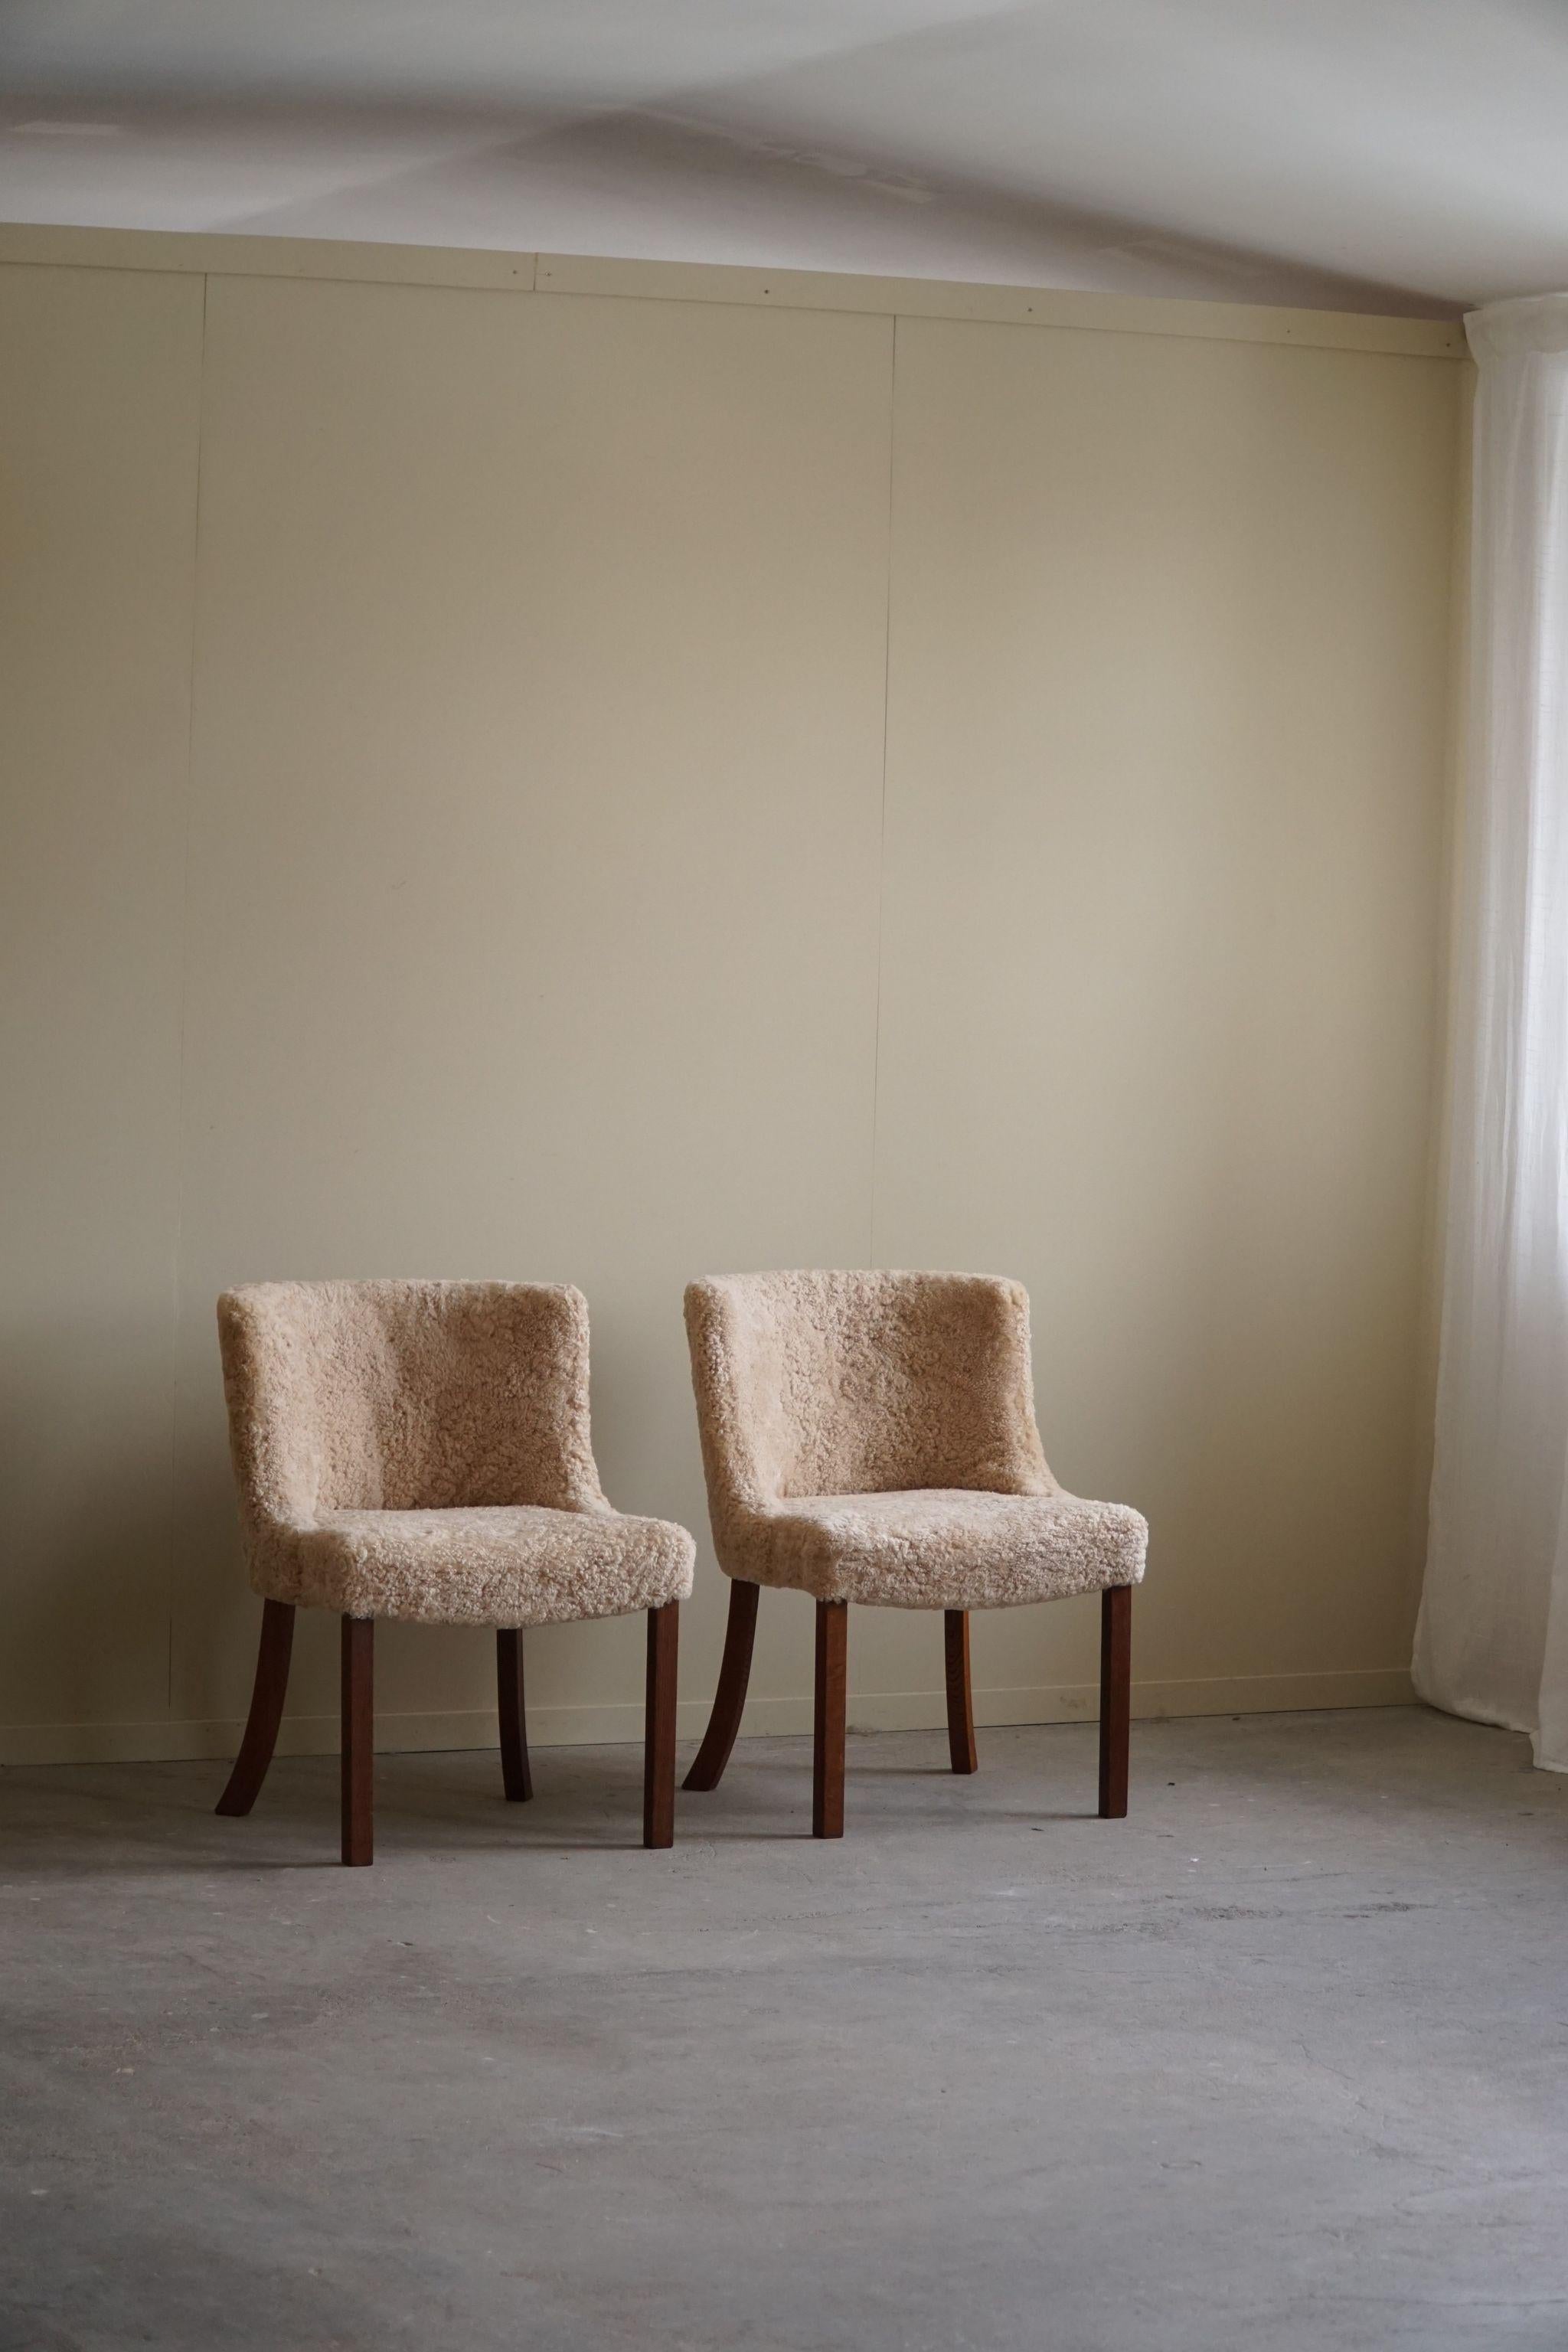 A Pair of Classic Chairs in Oak and Lambswool, Danish Modern, Kaj Gottlob, 1950s For Sale 6